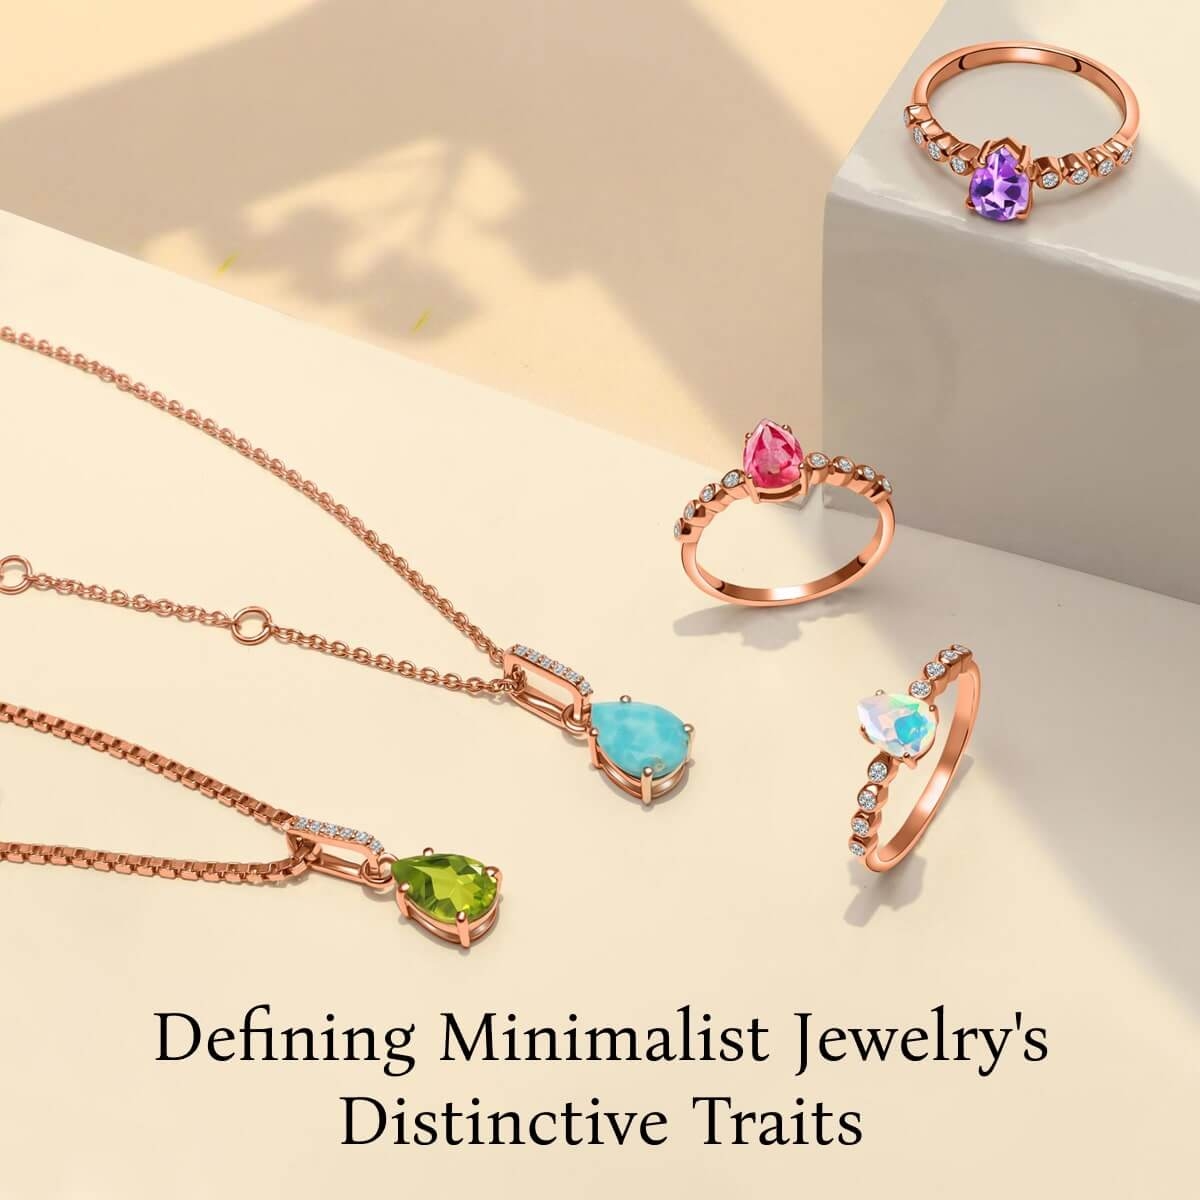 Characteristics of Minimalist Jewelry